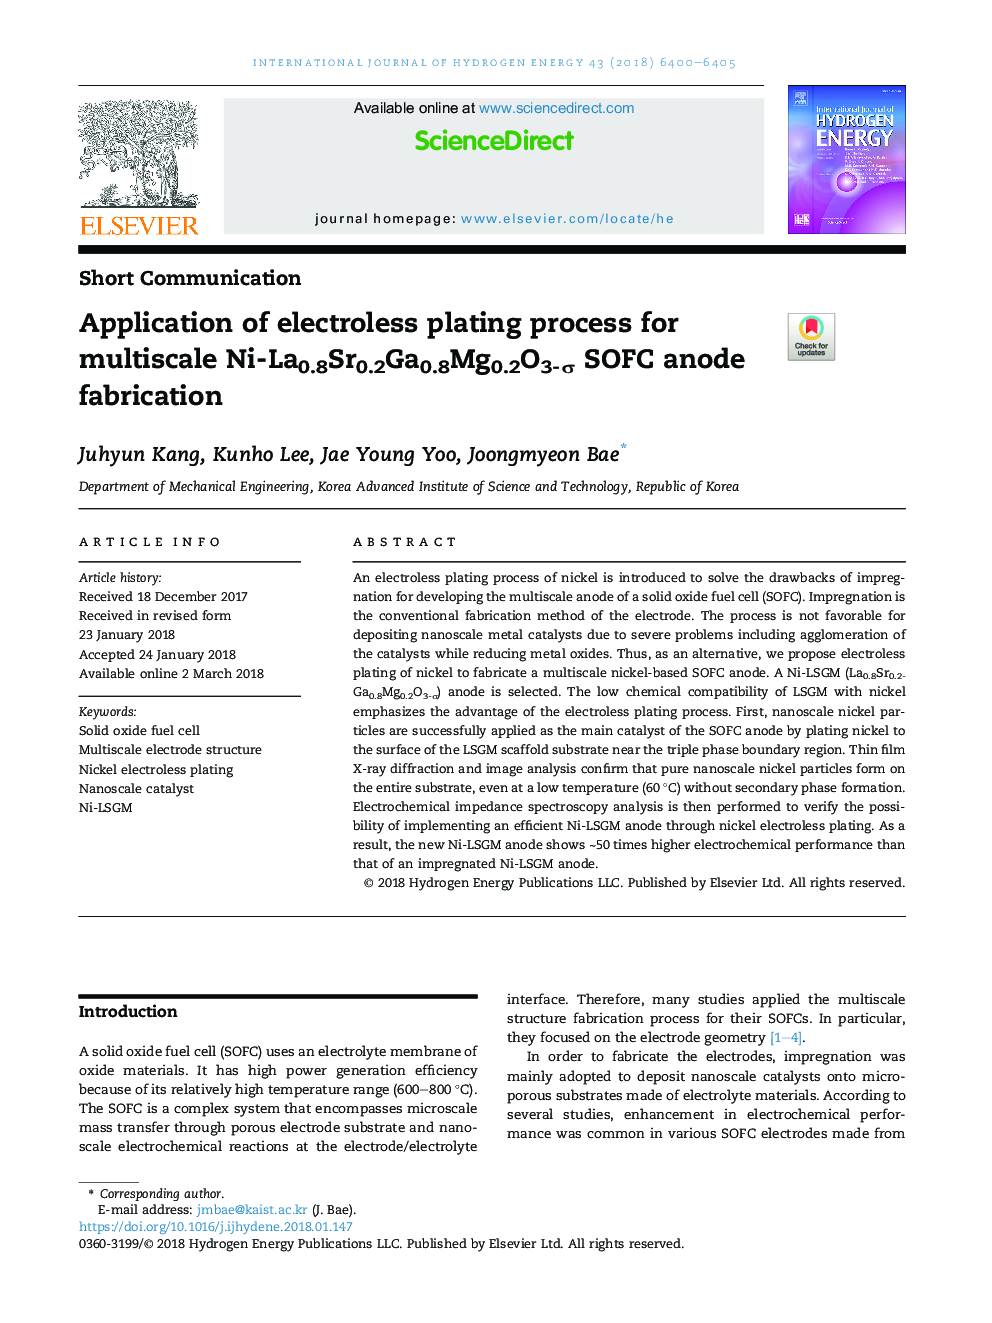 Application of electroless plating process for multiscale Ni-La0.8Sr0.2Ga0.8Mg0.2O3-Ï SOFC anode fabrication